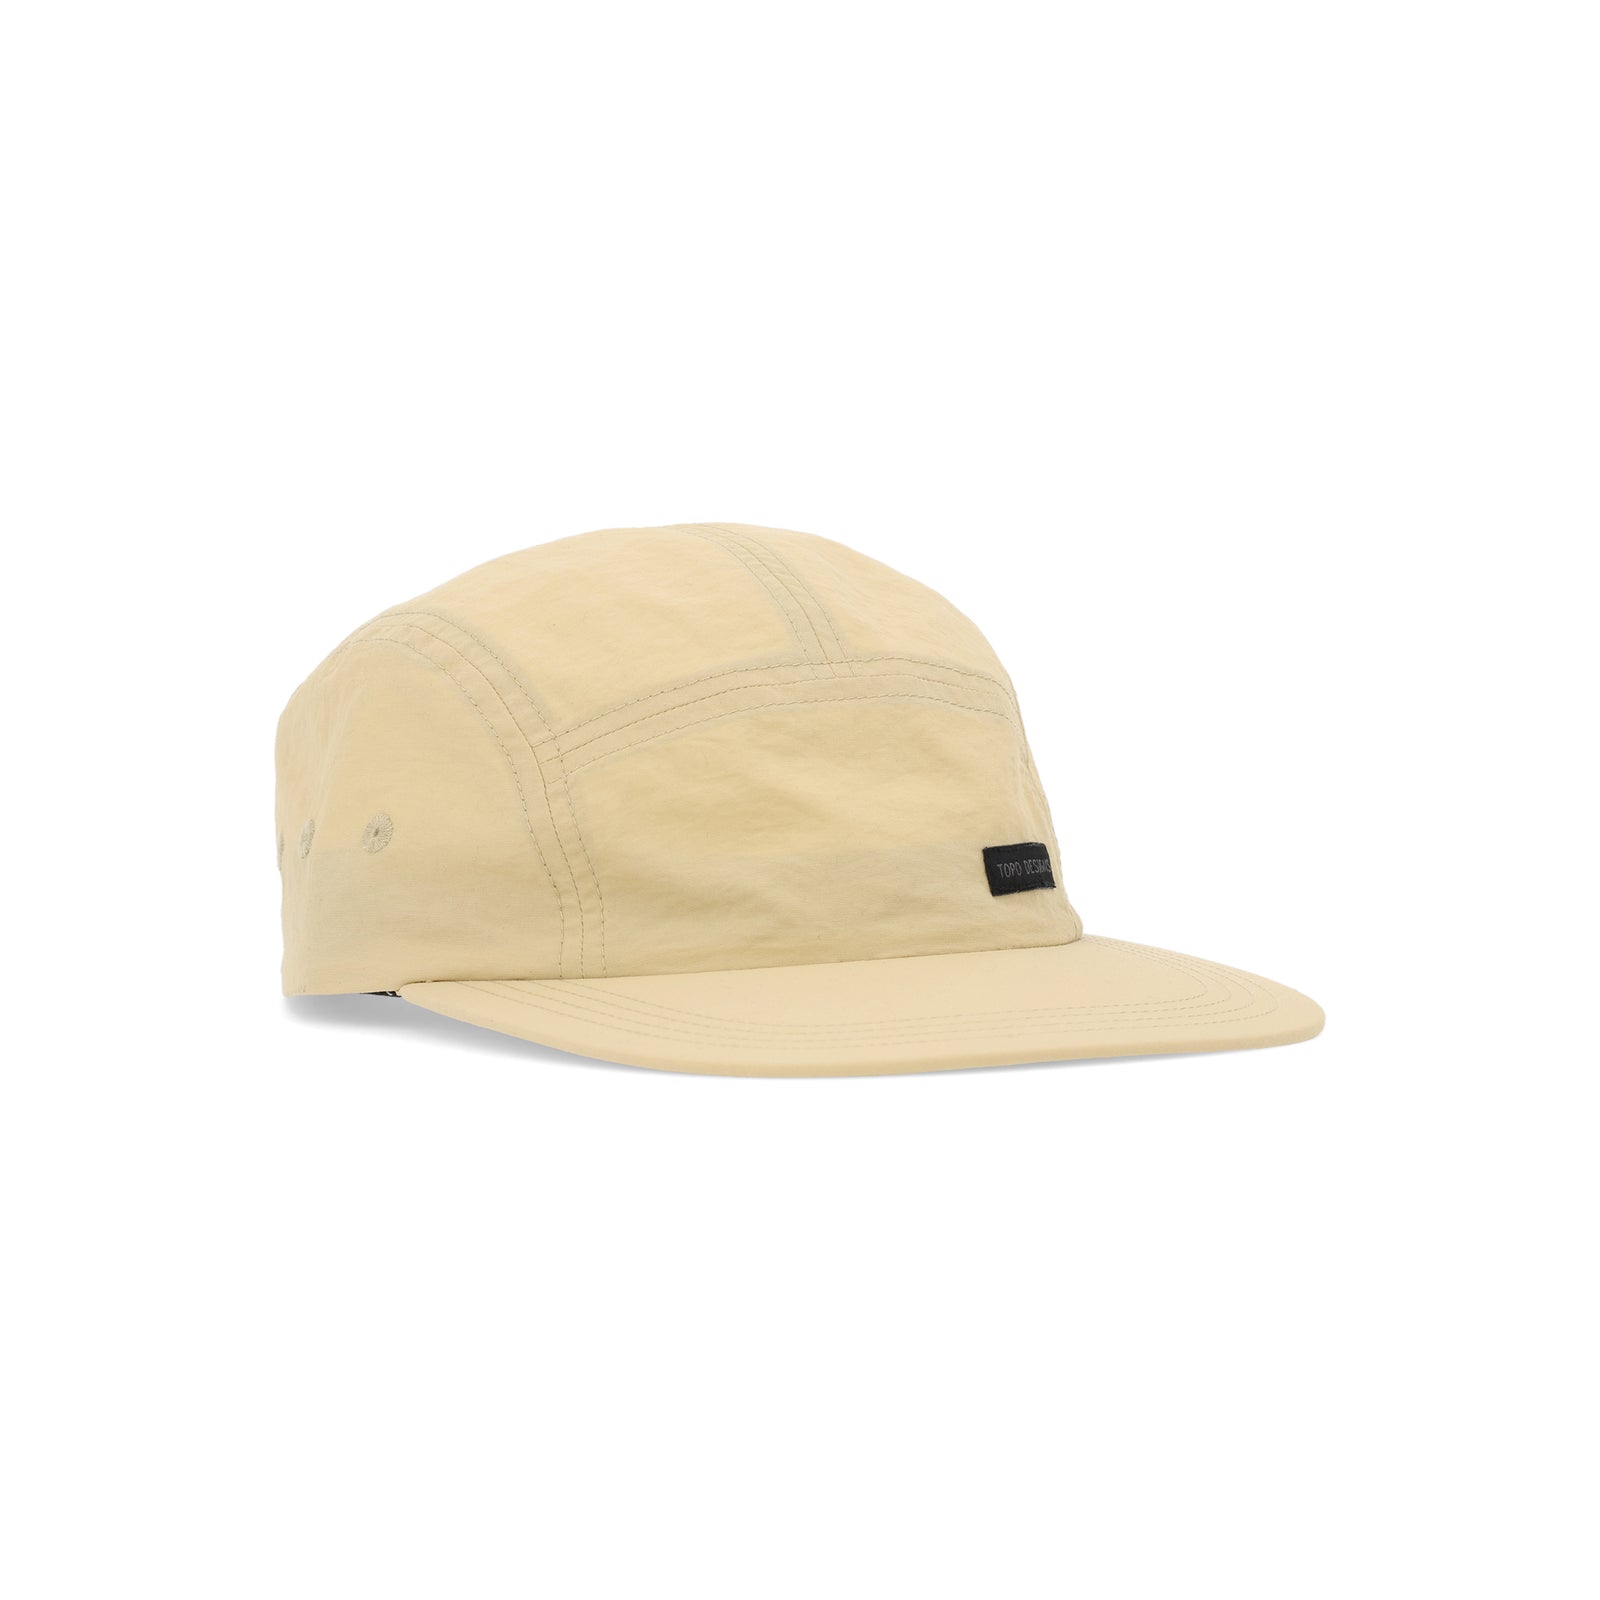 Topo Designs Nylon Camp 5-panel flat brim Hat in "Tan" brown.